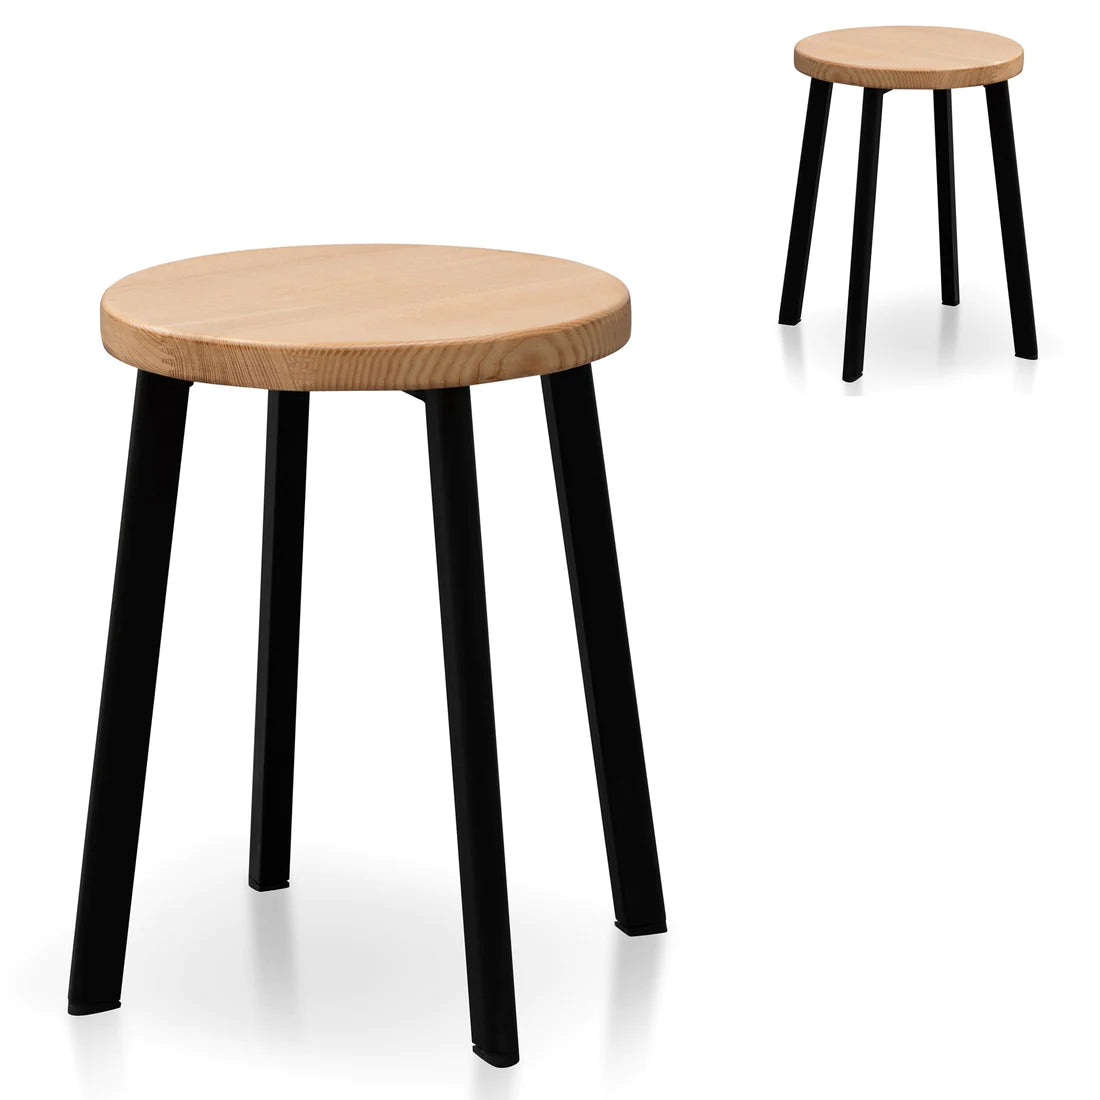 46cm Natural Wooden Seat Low Stool - Black Legs(Set of 2)